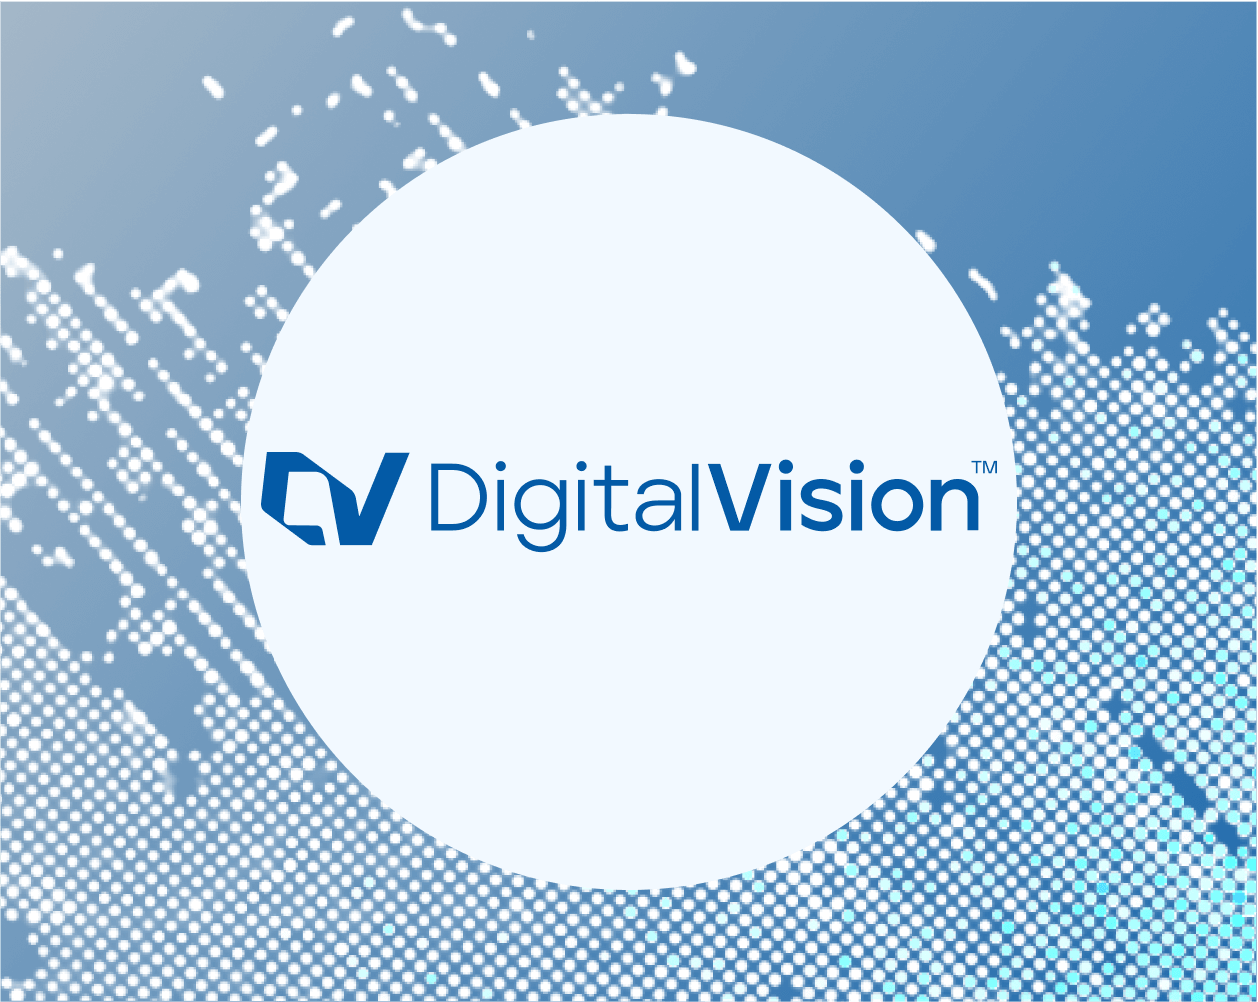 Digital Vision